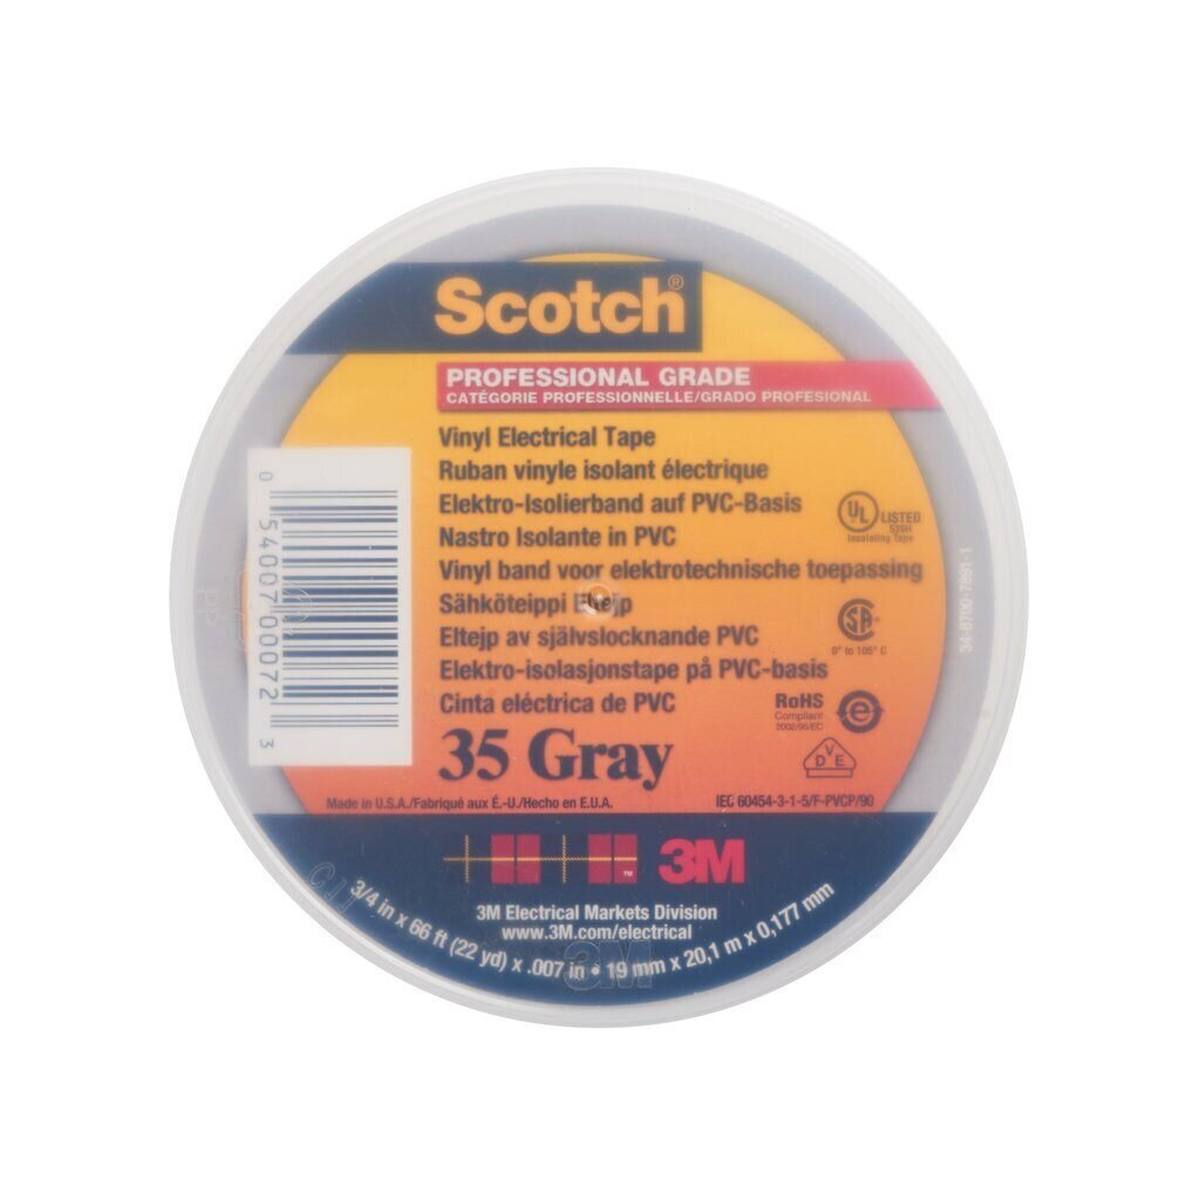 3M Scotch 35 Vinyl Electrical Insulating Tape, gray, 19 mm x 20 m, 0.18 mm